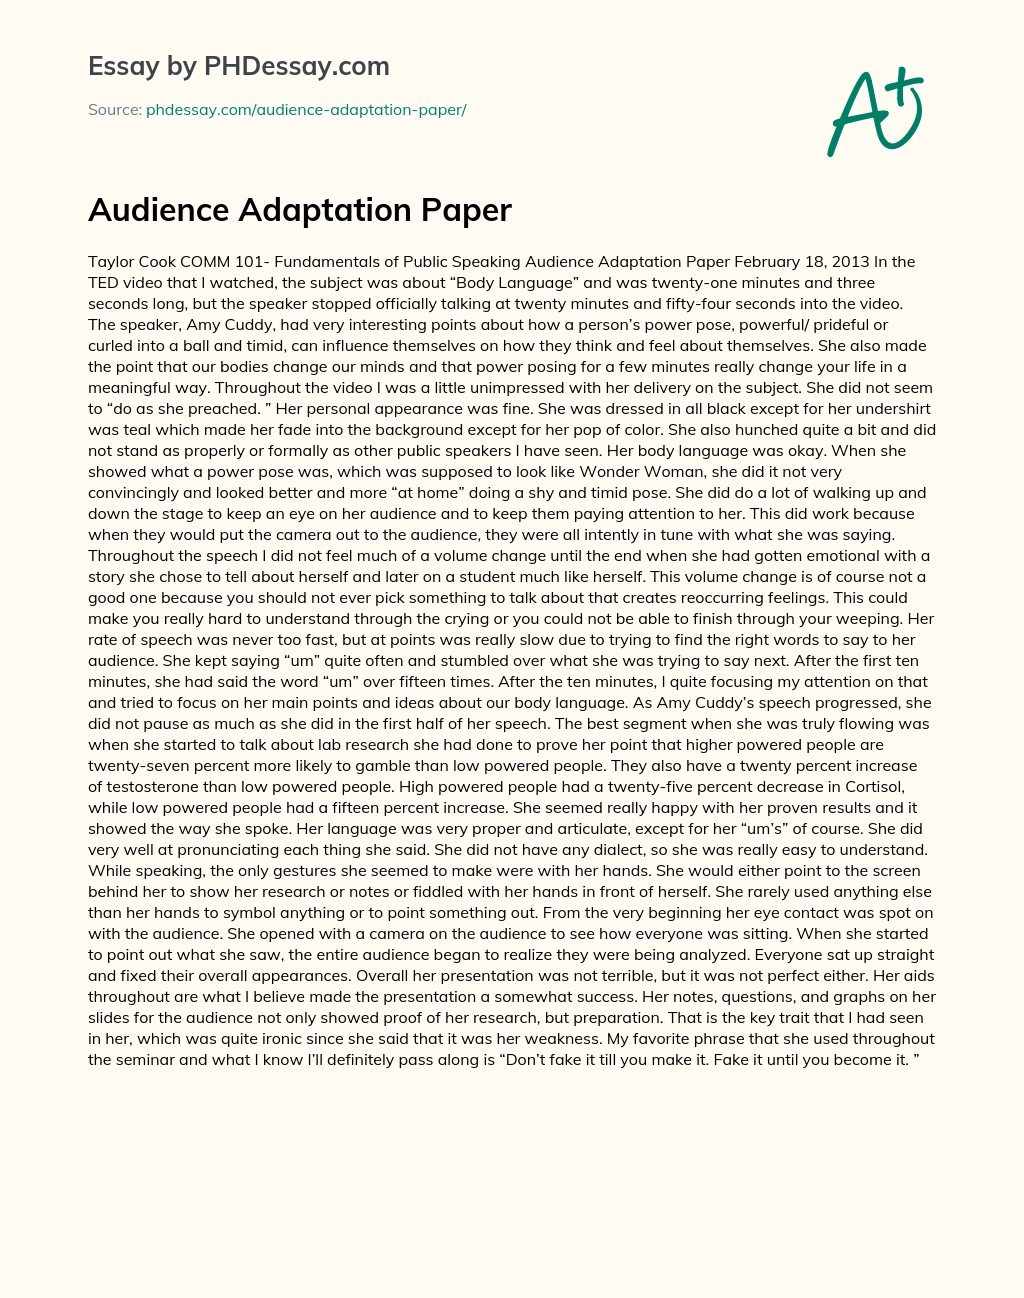 Audience Adaptation Paper essay